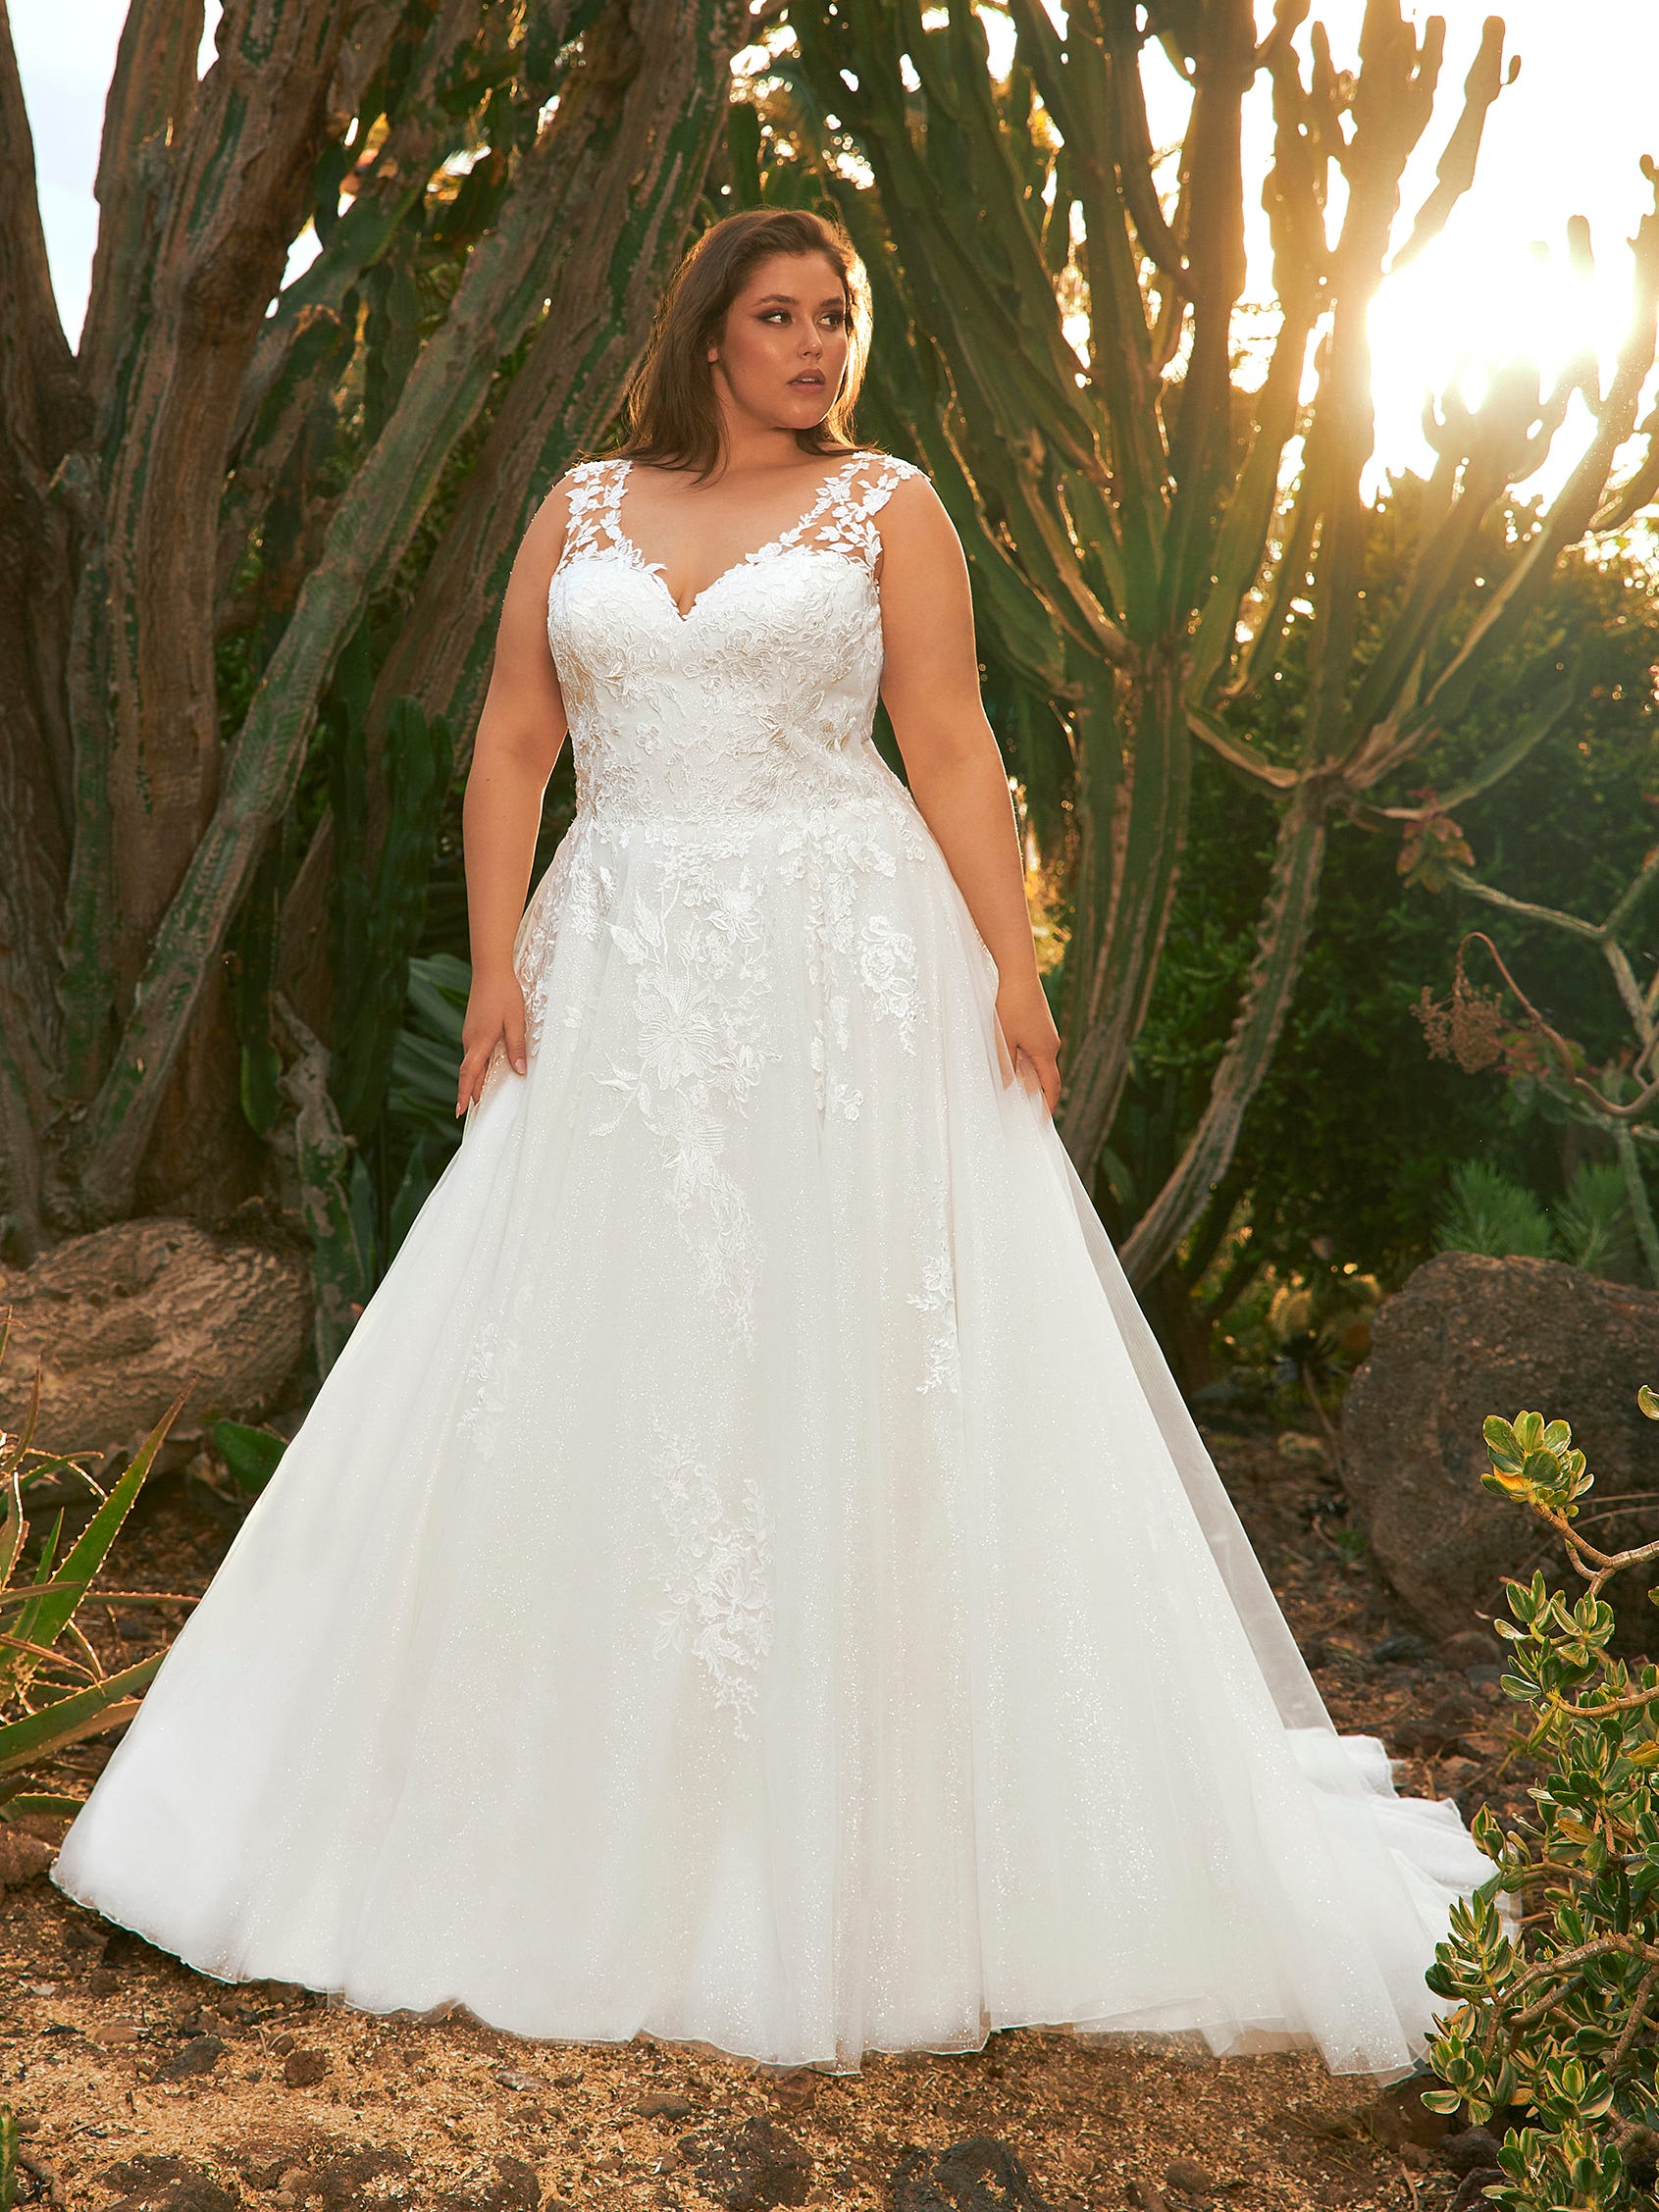 Illusion Plunging White Tulle Wedding Dress 2020  Greek wedding dresses,  Wedding dress shopping, White tulle wedding dress